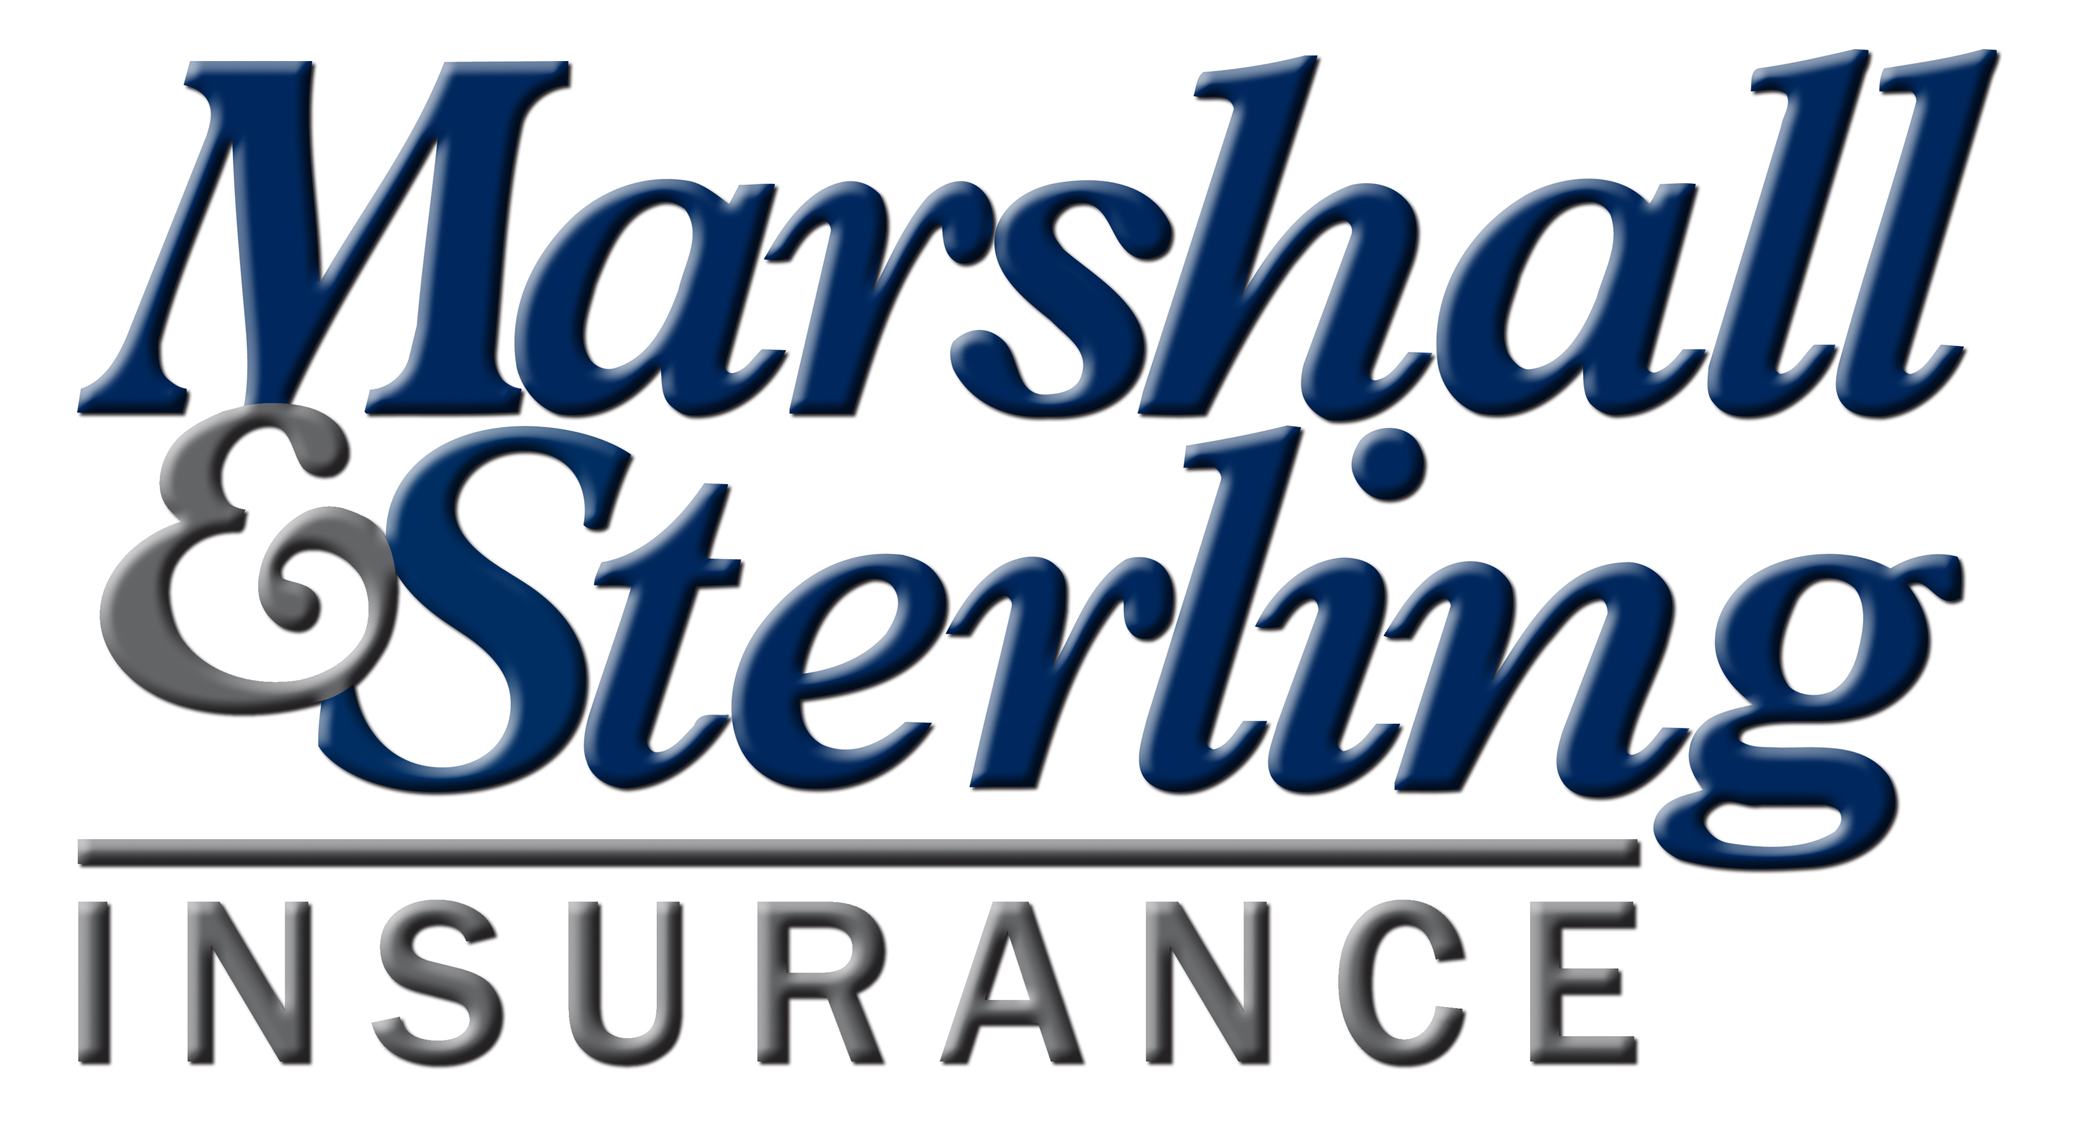 Marshall & Sterling Insurance logo